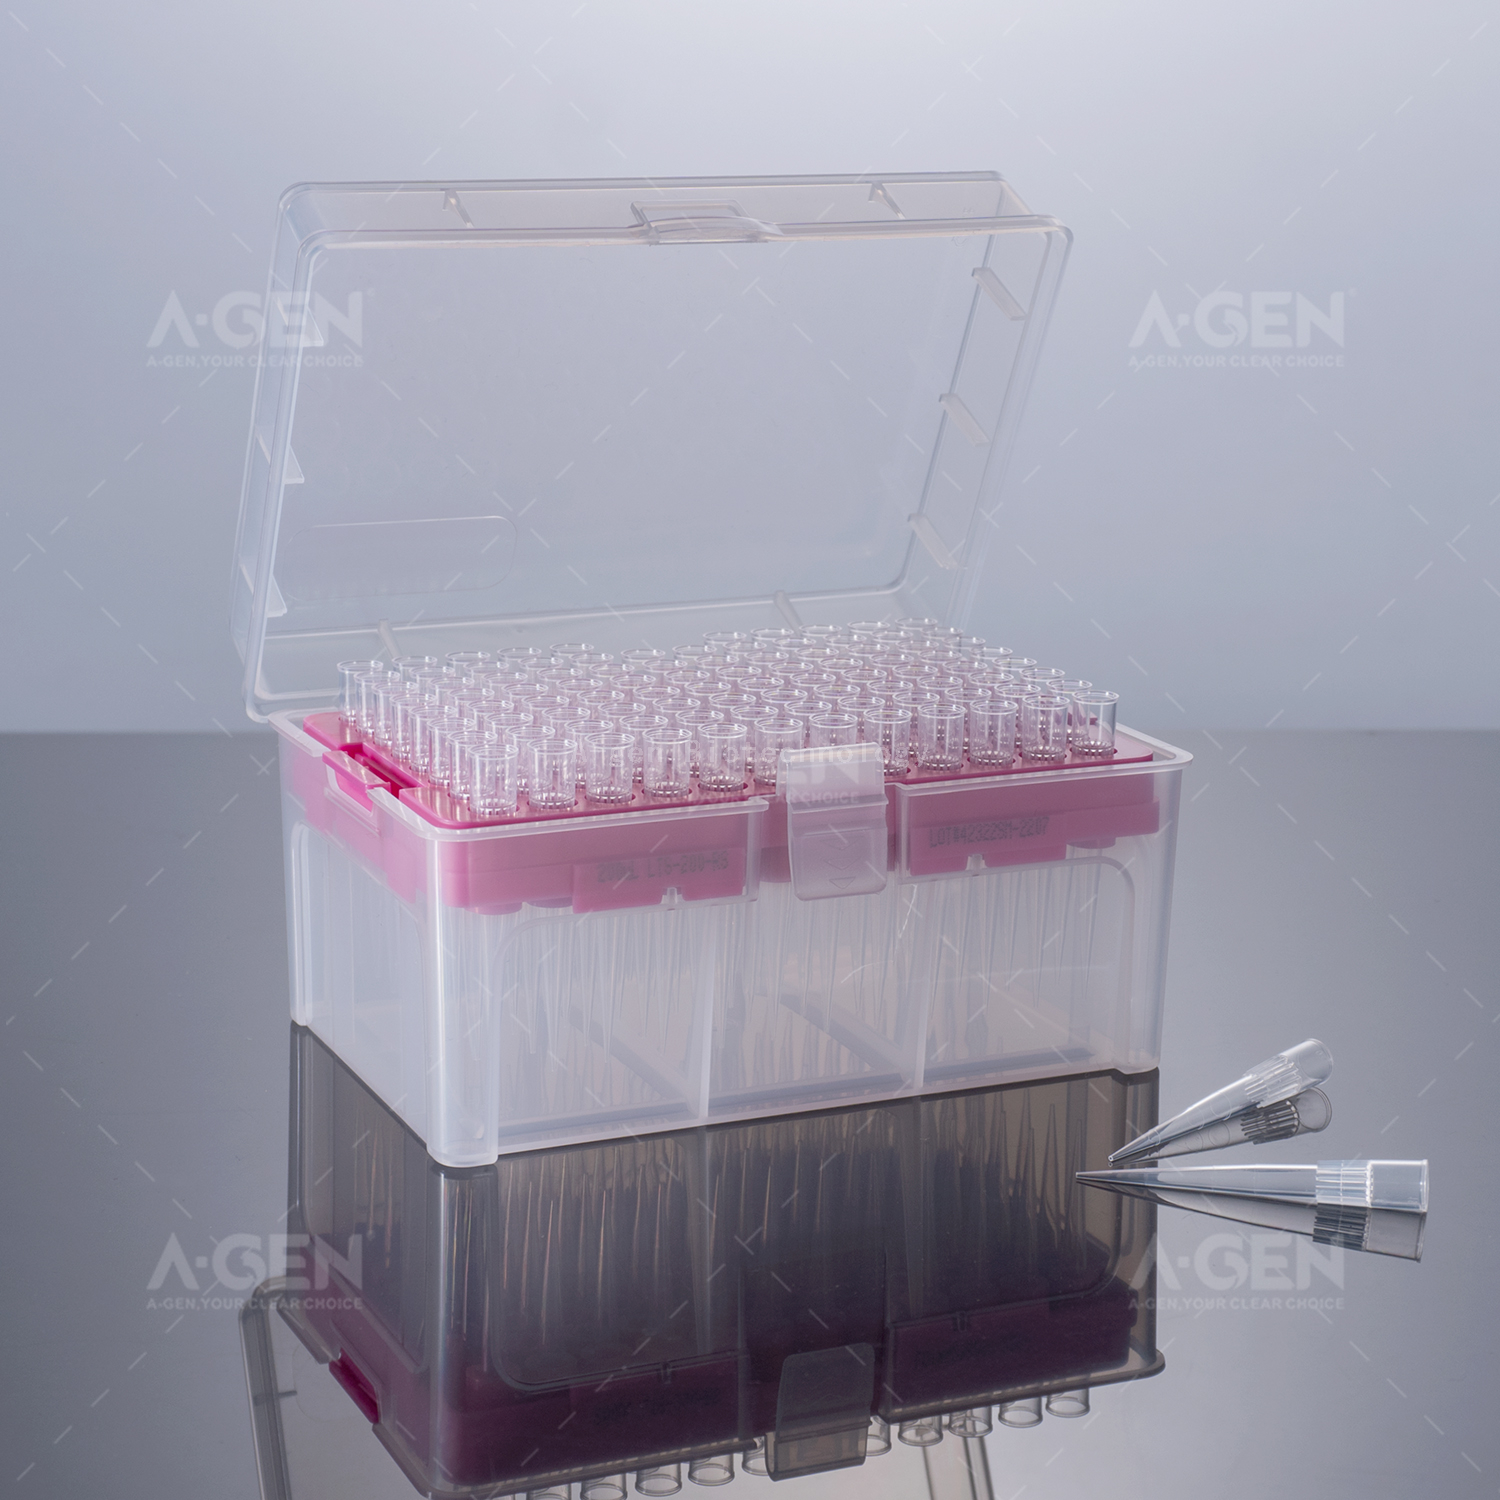 Rainin Sterilization Low Retention 200uL Transparent Tip Packed in Rack 